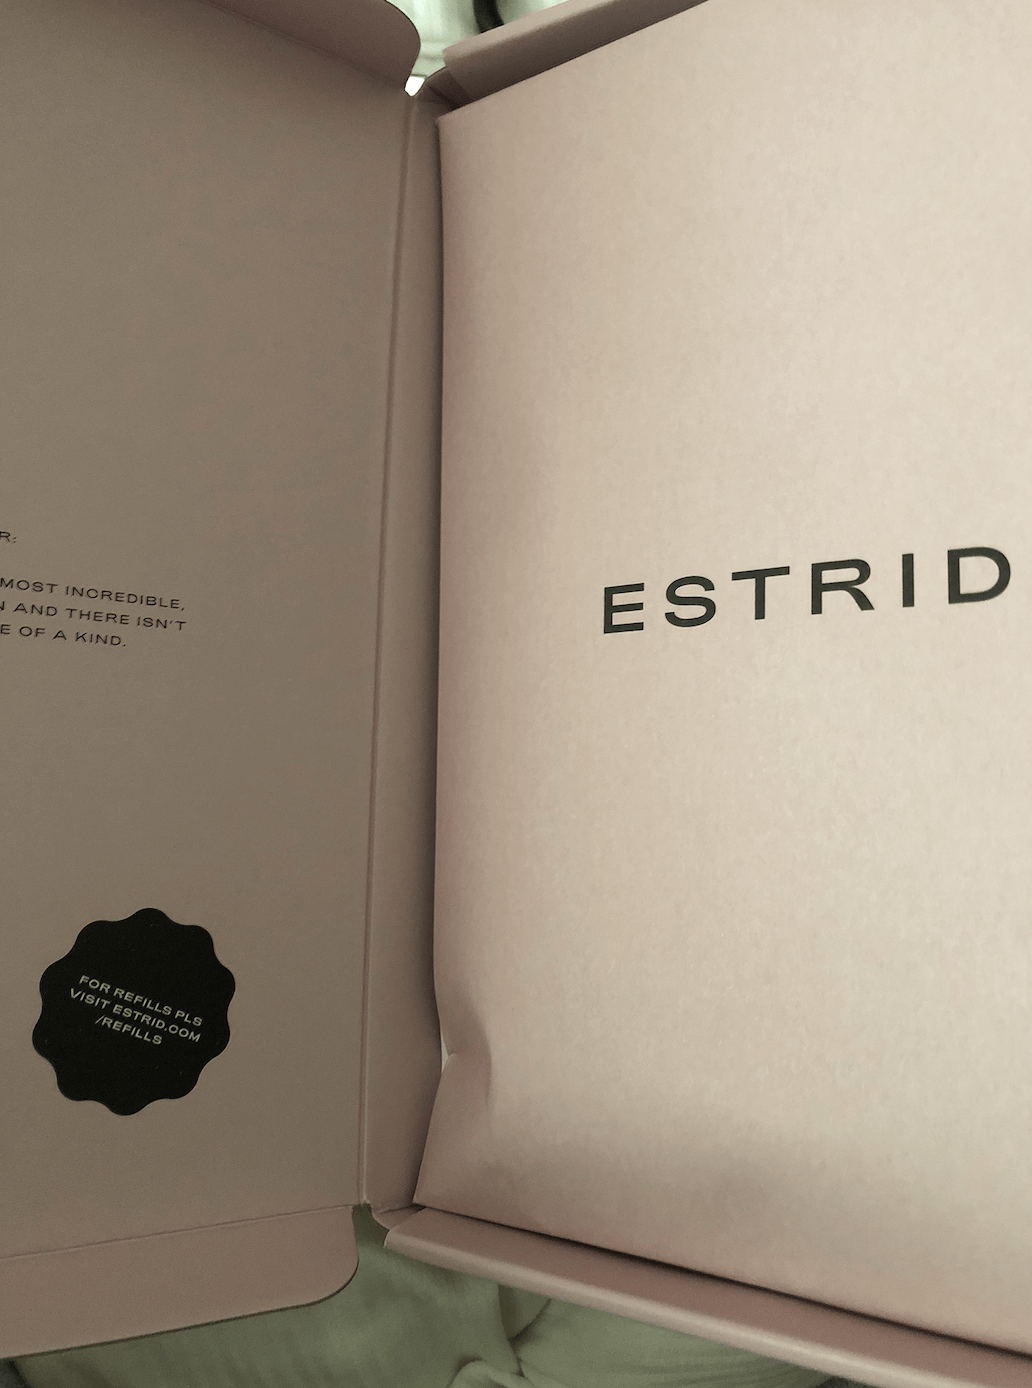 Starter Kit Estrid Razor Review